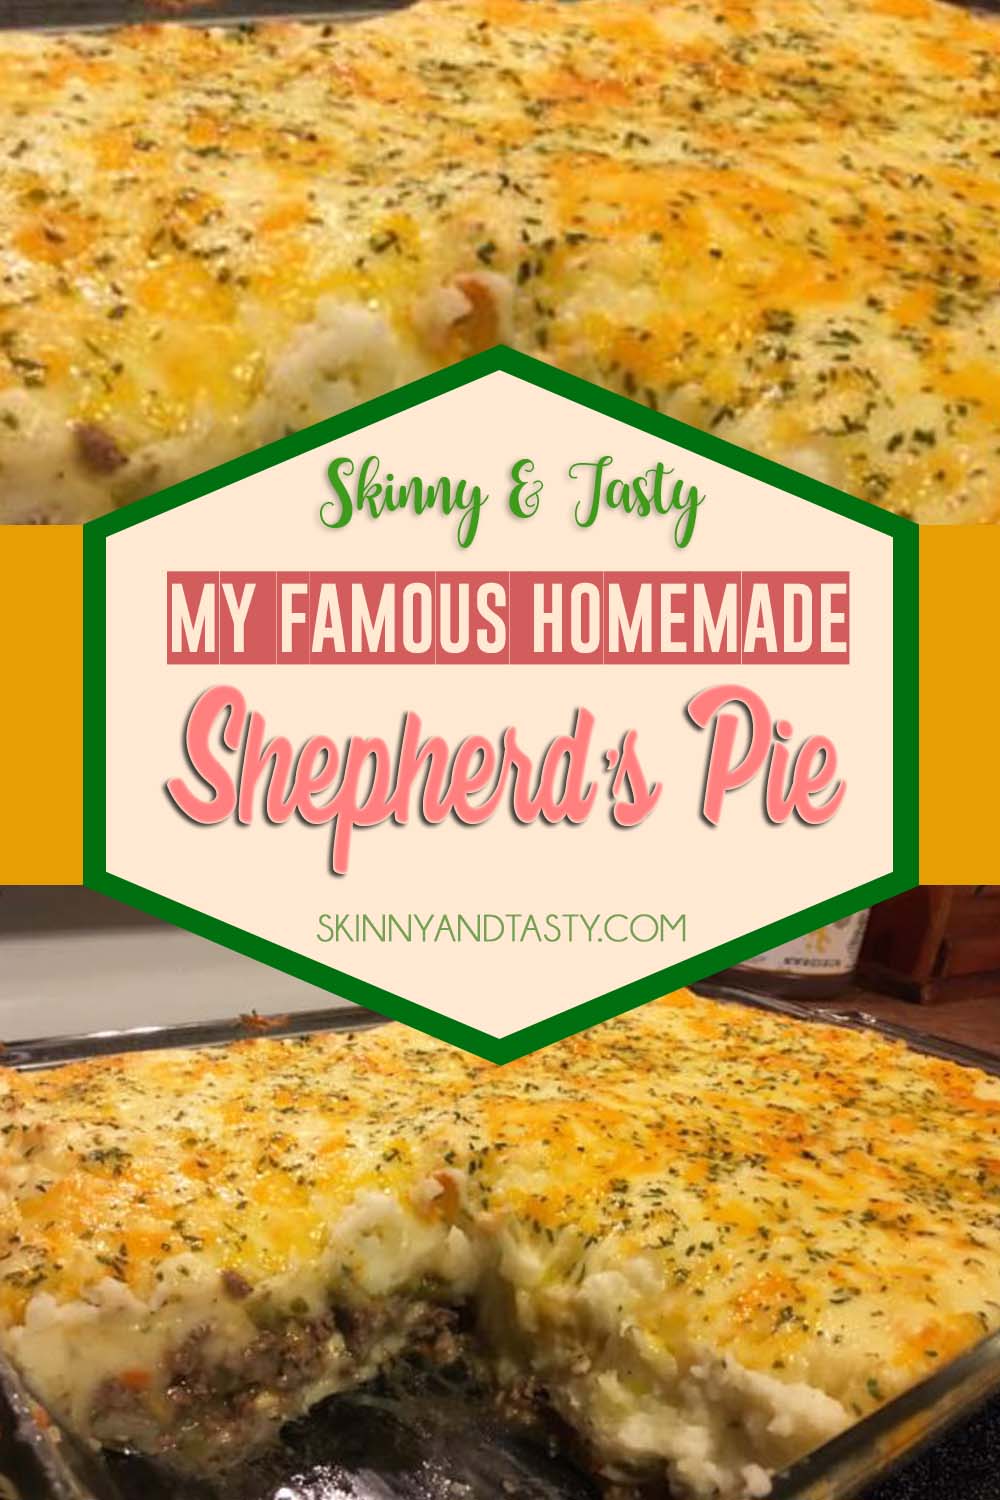 Sheperds Pie Recipe